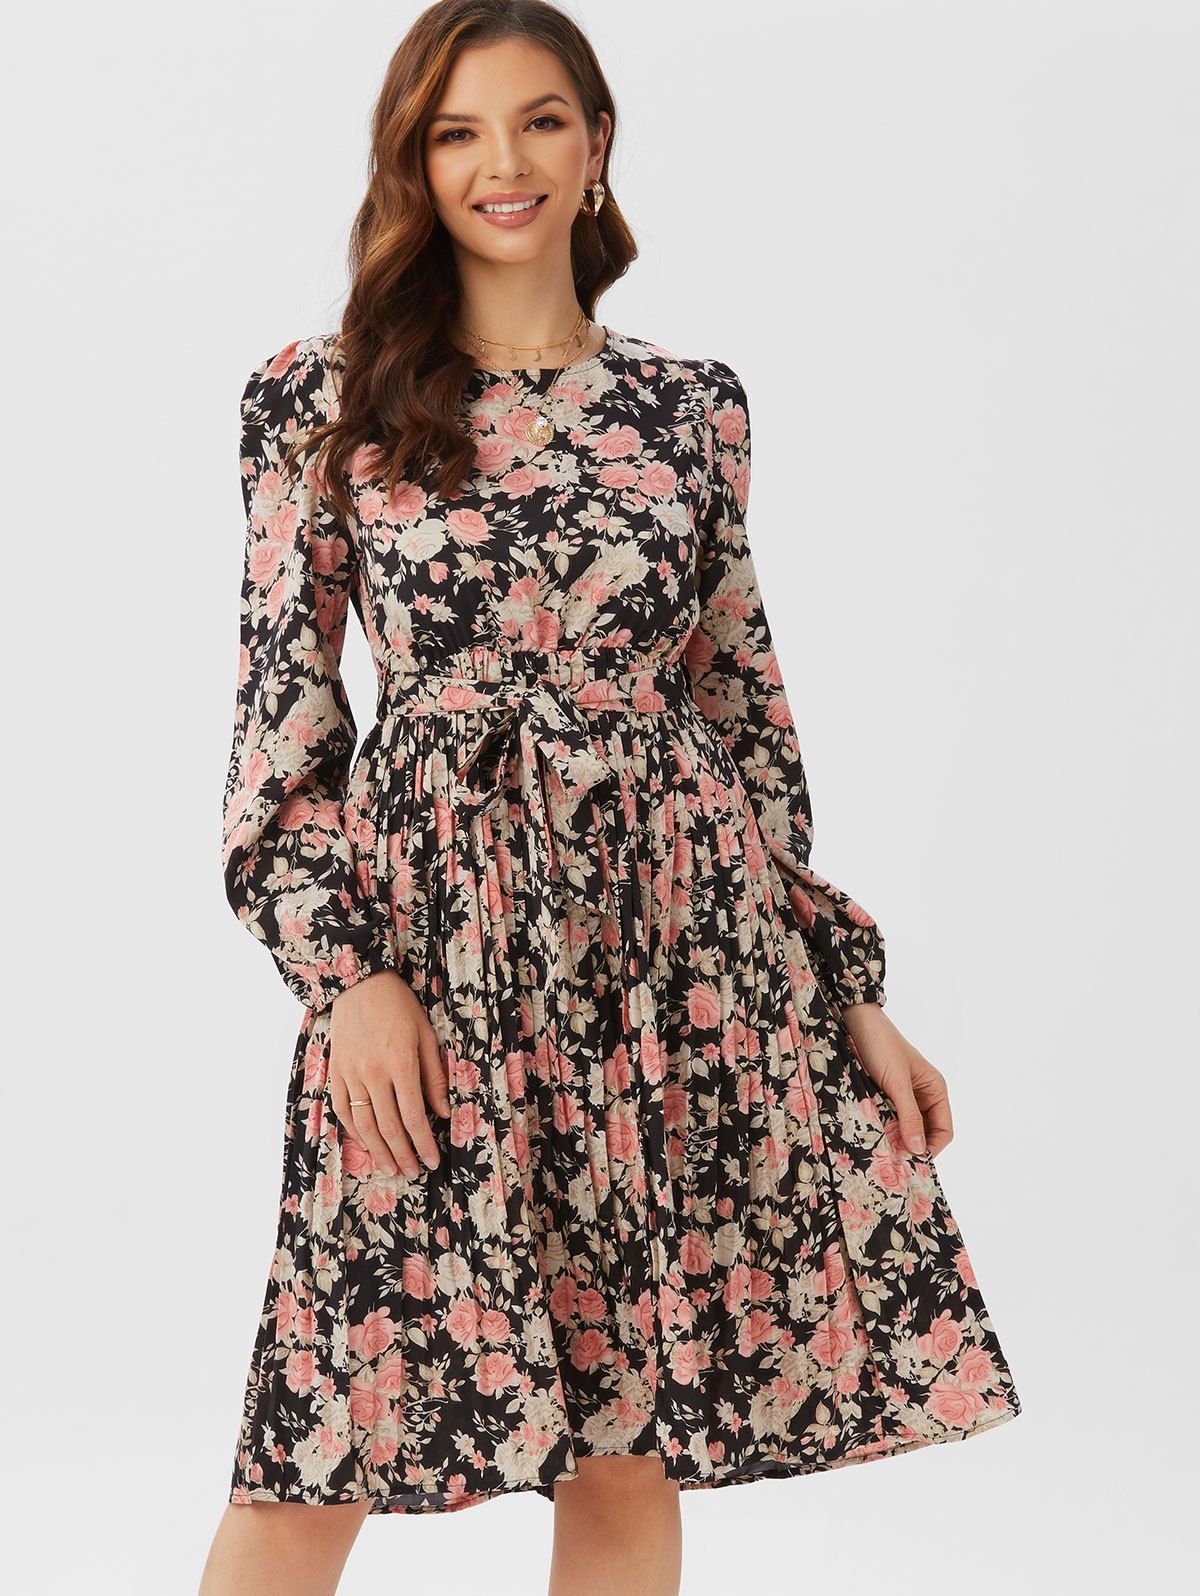 Bohemian Floral Print Knee Length Dress - BLACK XL